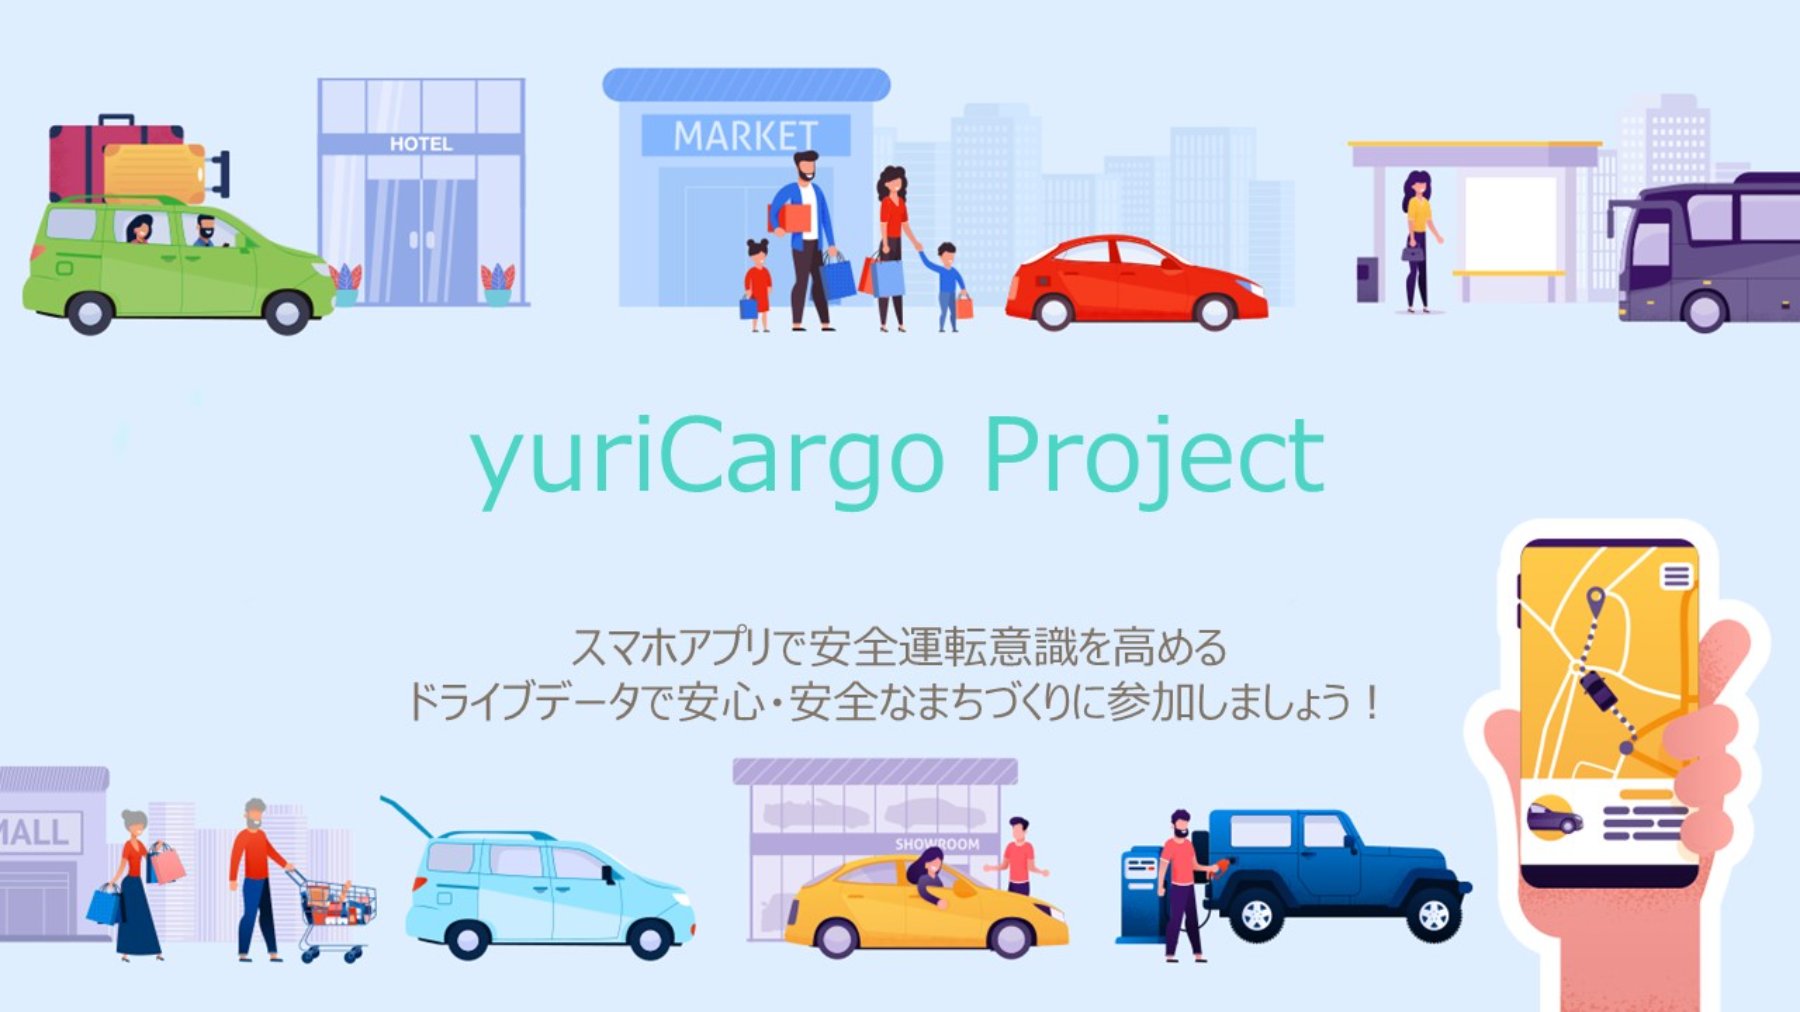 【yuriCargoアプリをインストールしてコイン獲得】
スマホで安全意識の高い運転＆安心安全なまちづくりに参加しましょう！